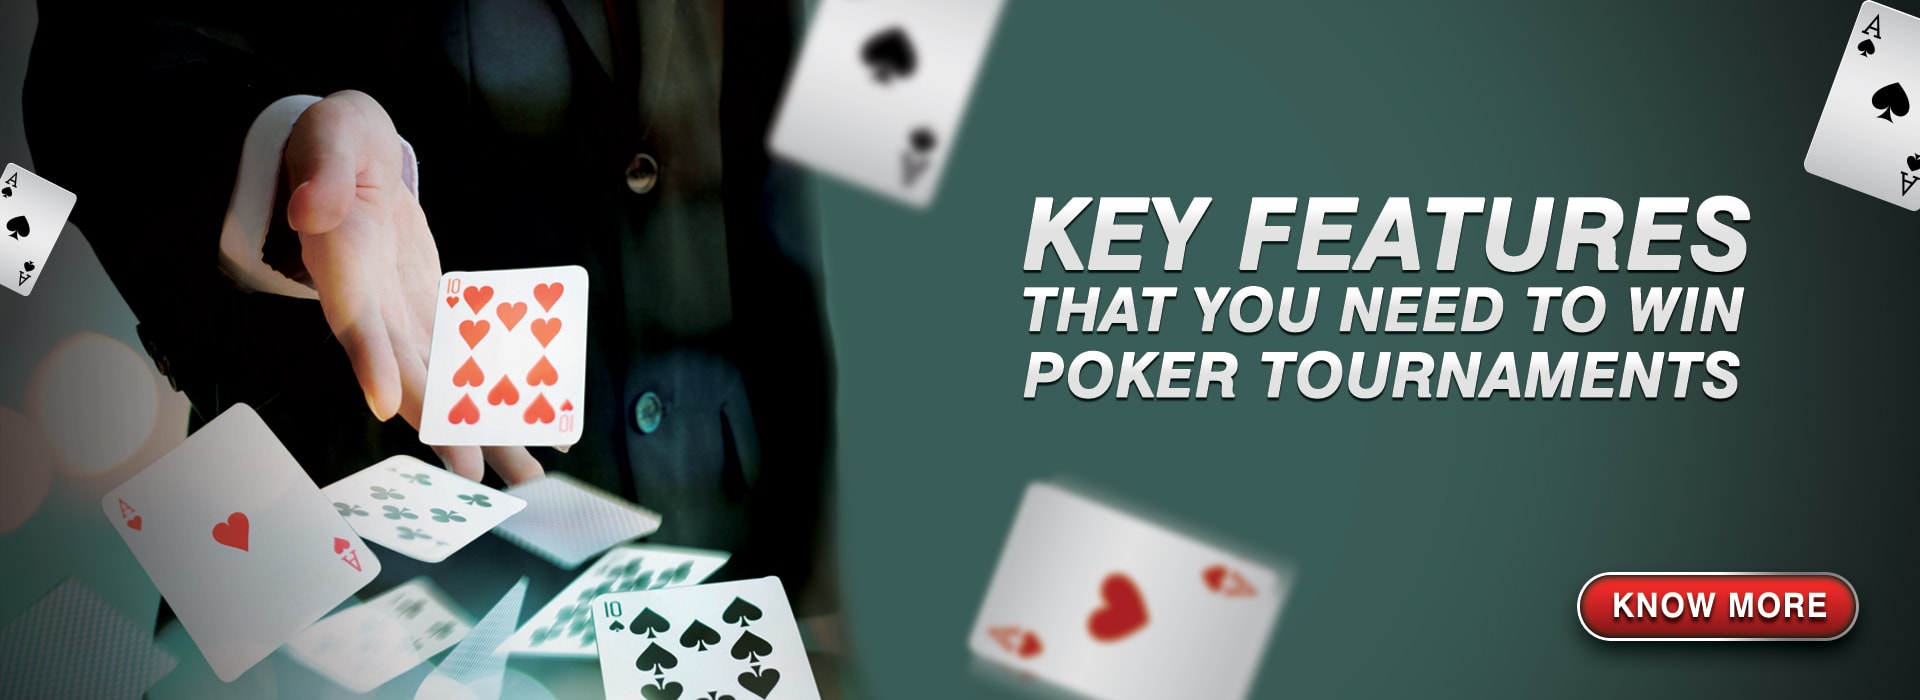 Key Skills For Winning Poker Tournaments